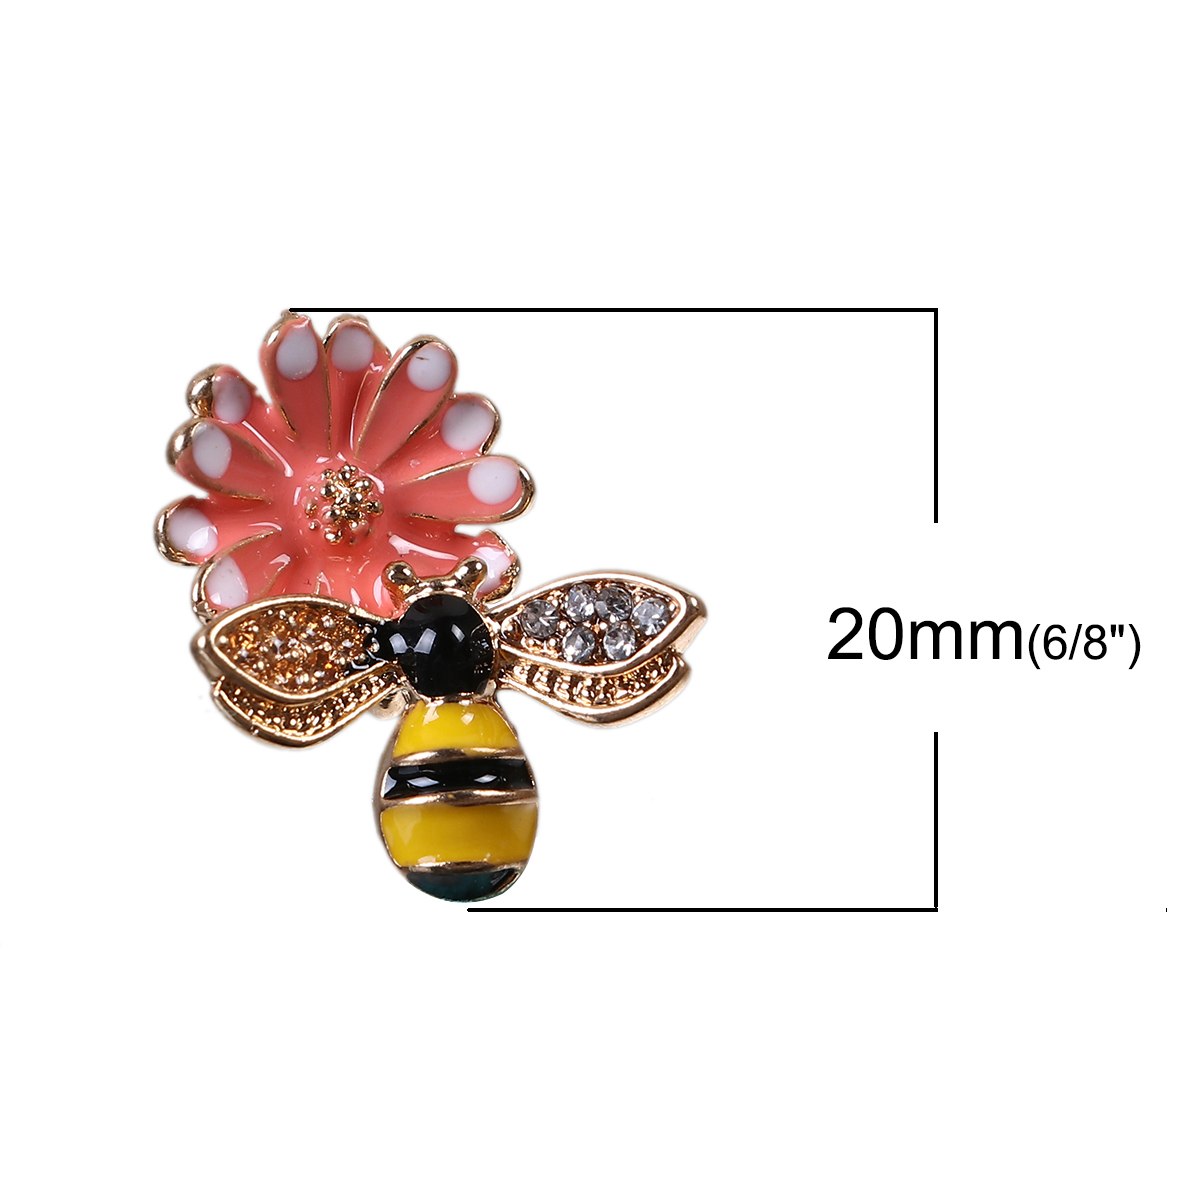 Picture of Zinc Based Alloy Charms Daisy Flower Orange Yellow Bee Clear Rhinestone Enamel 20mm( 6/8") x 18mm( 6/8"), 5 PCs